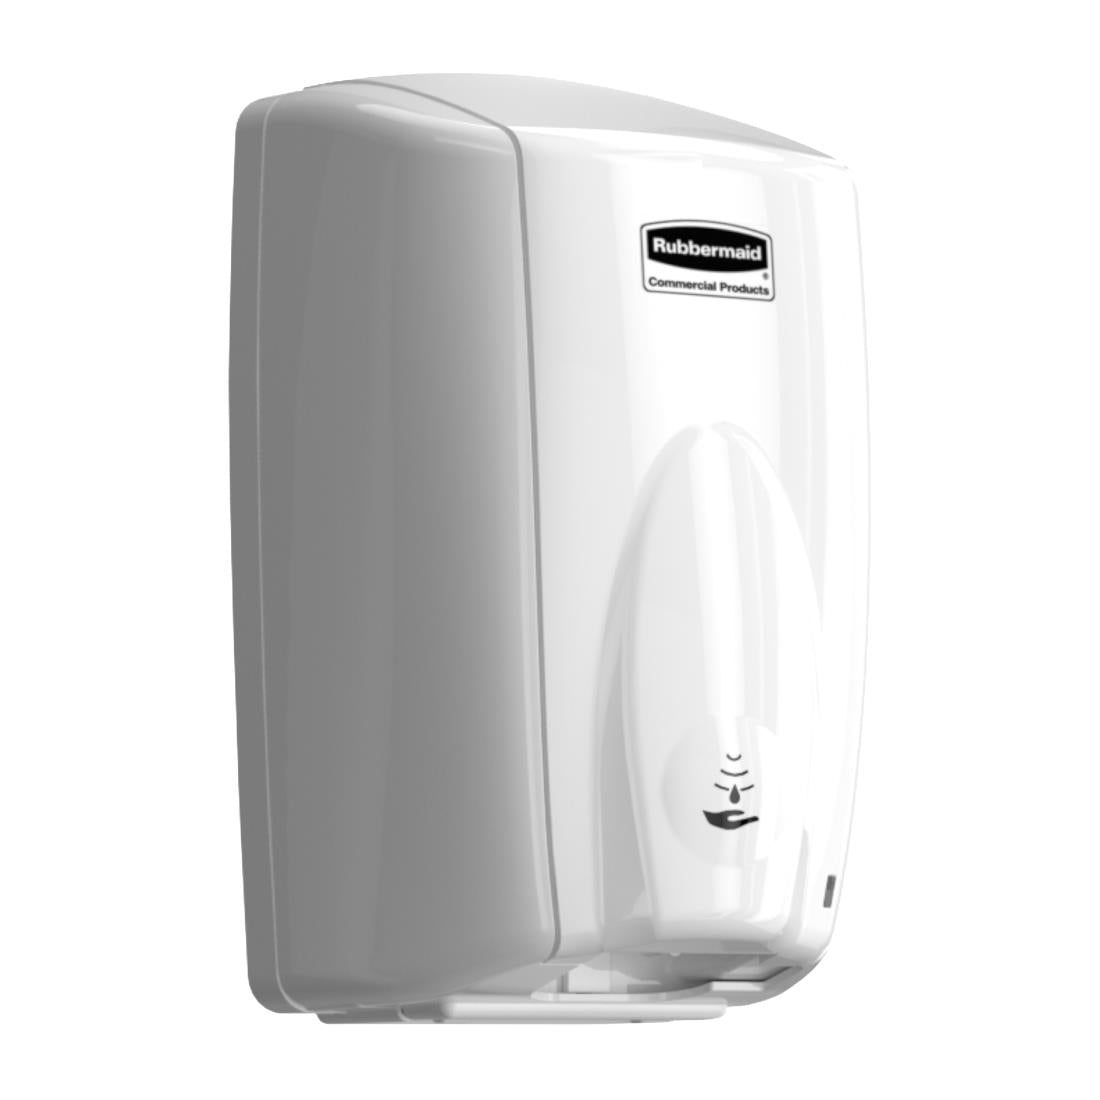 CK011 Rubbermaid AutoFoam Touch-Free Foam Hand Soap and Sanitiser Dispenser 500ml JD Catering Equipment Solutions Ltd